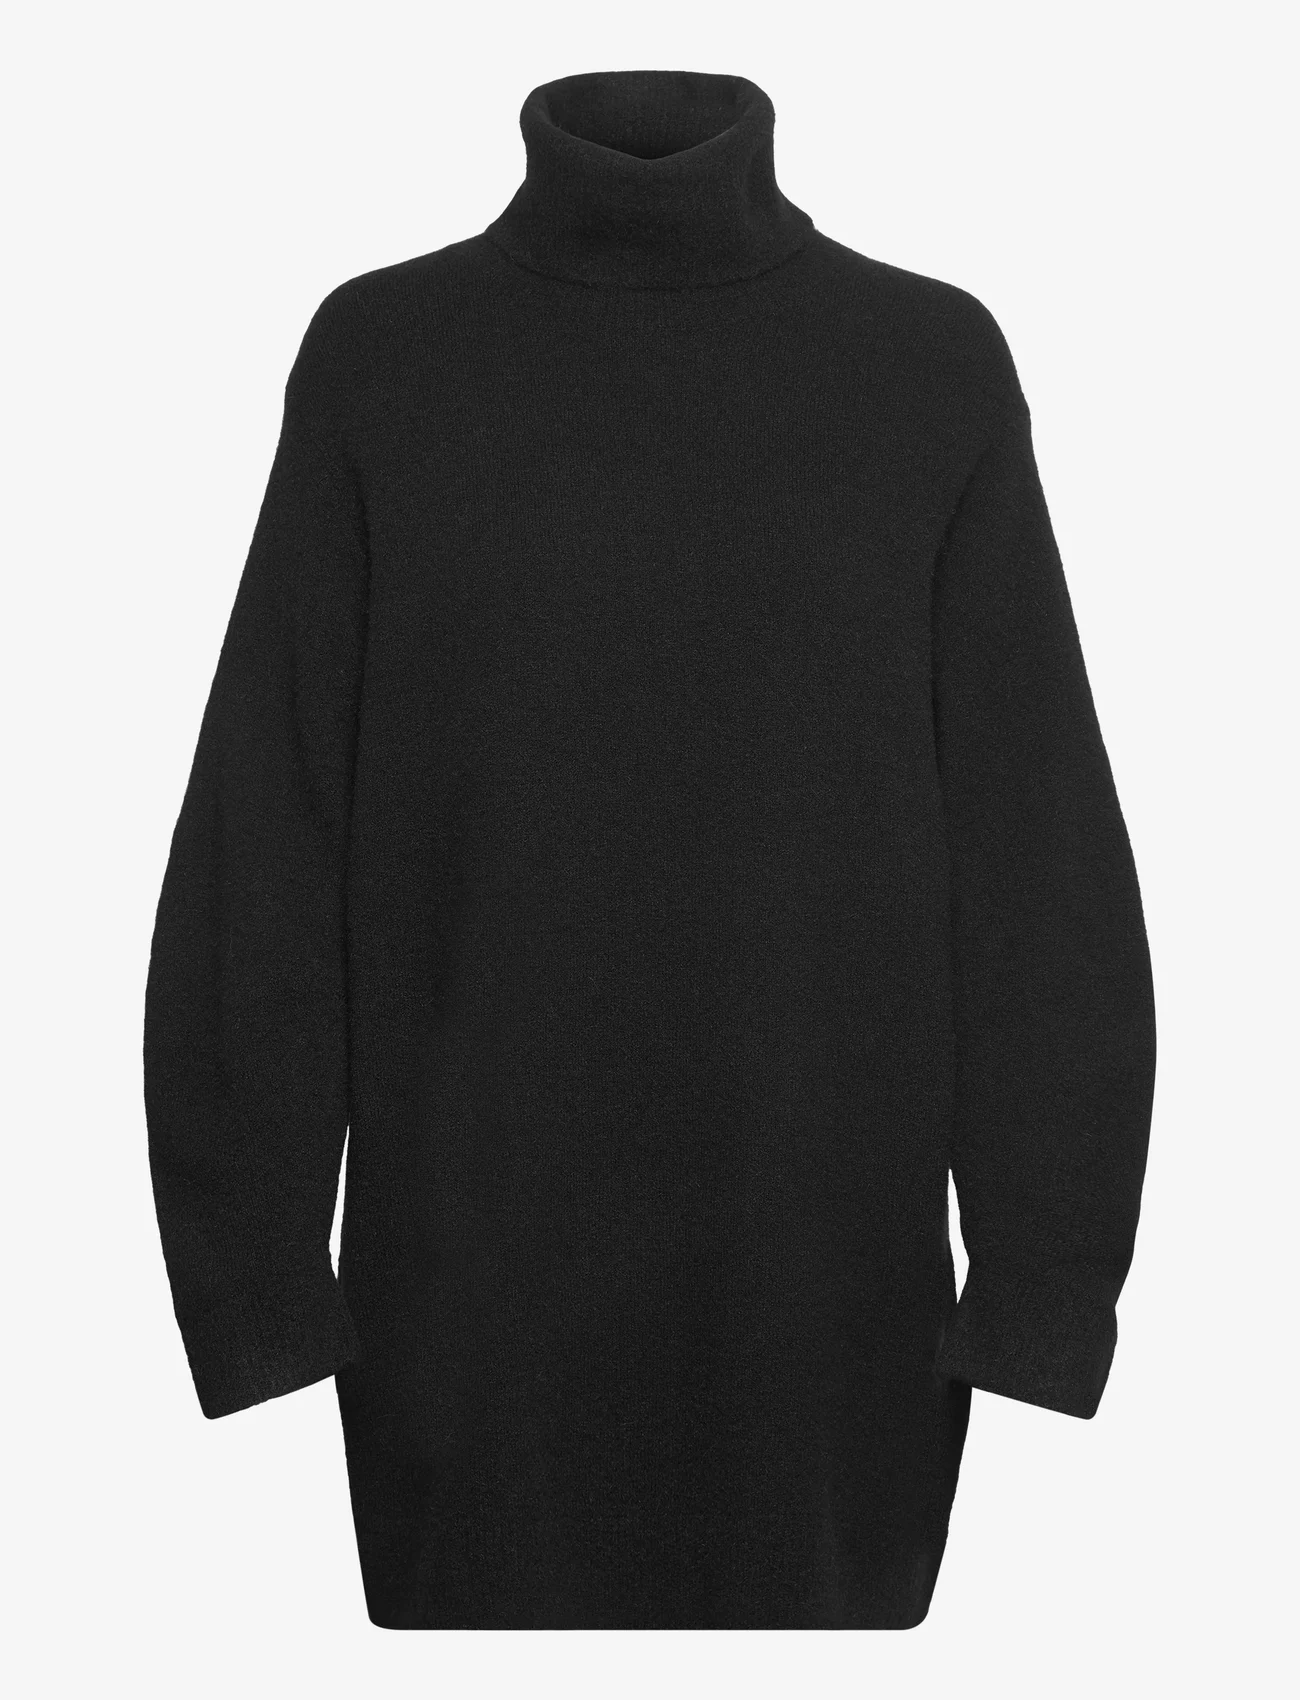 Ilse Jacobsen - Pullover - long sleeve - megztiniai su aukšta apykakle - black - 0